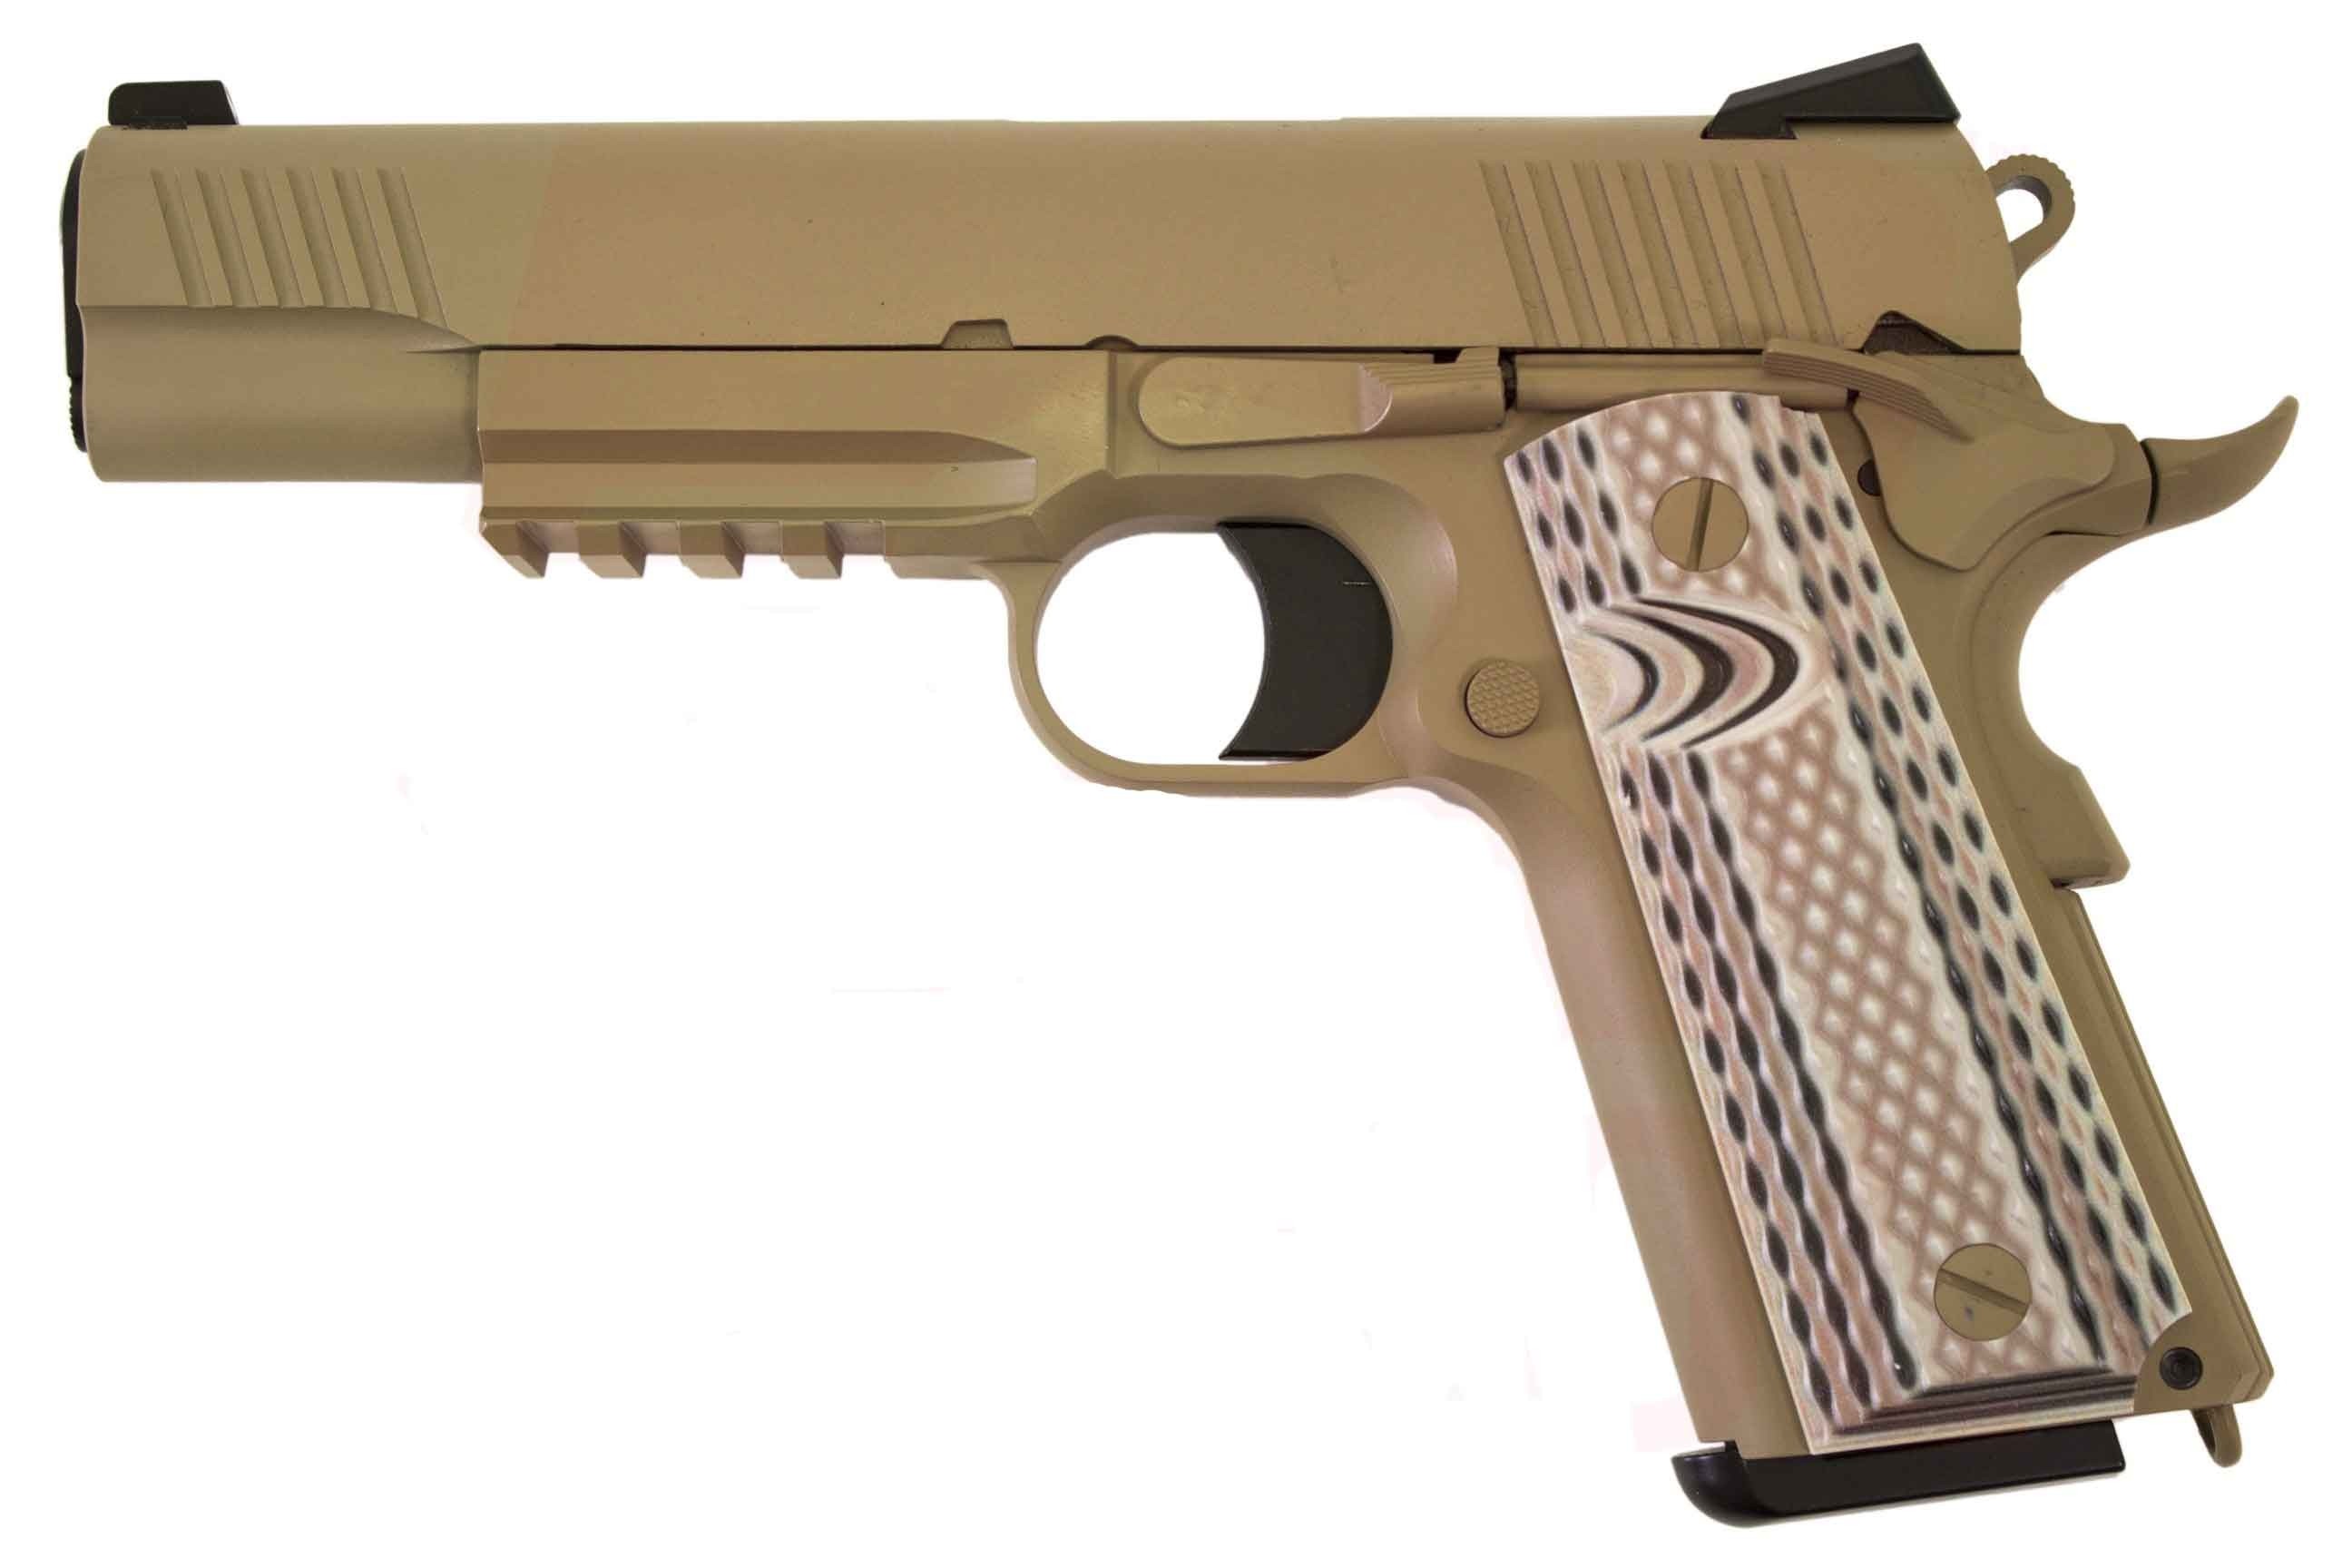 WE M45A1 Full Metal GBB Pistol - Tan